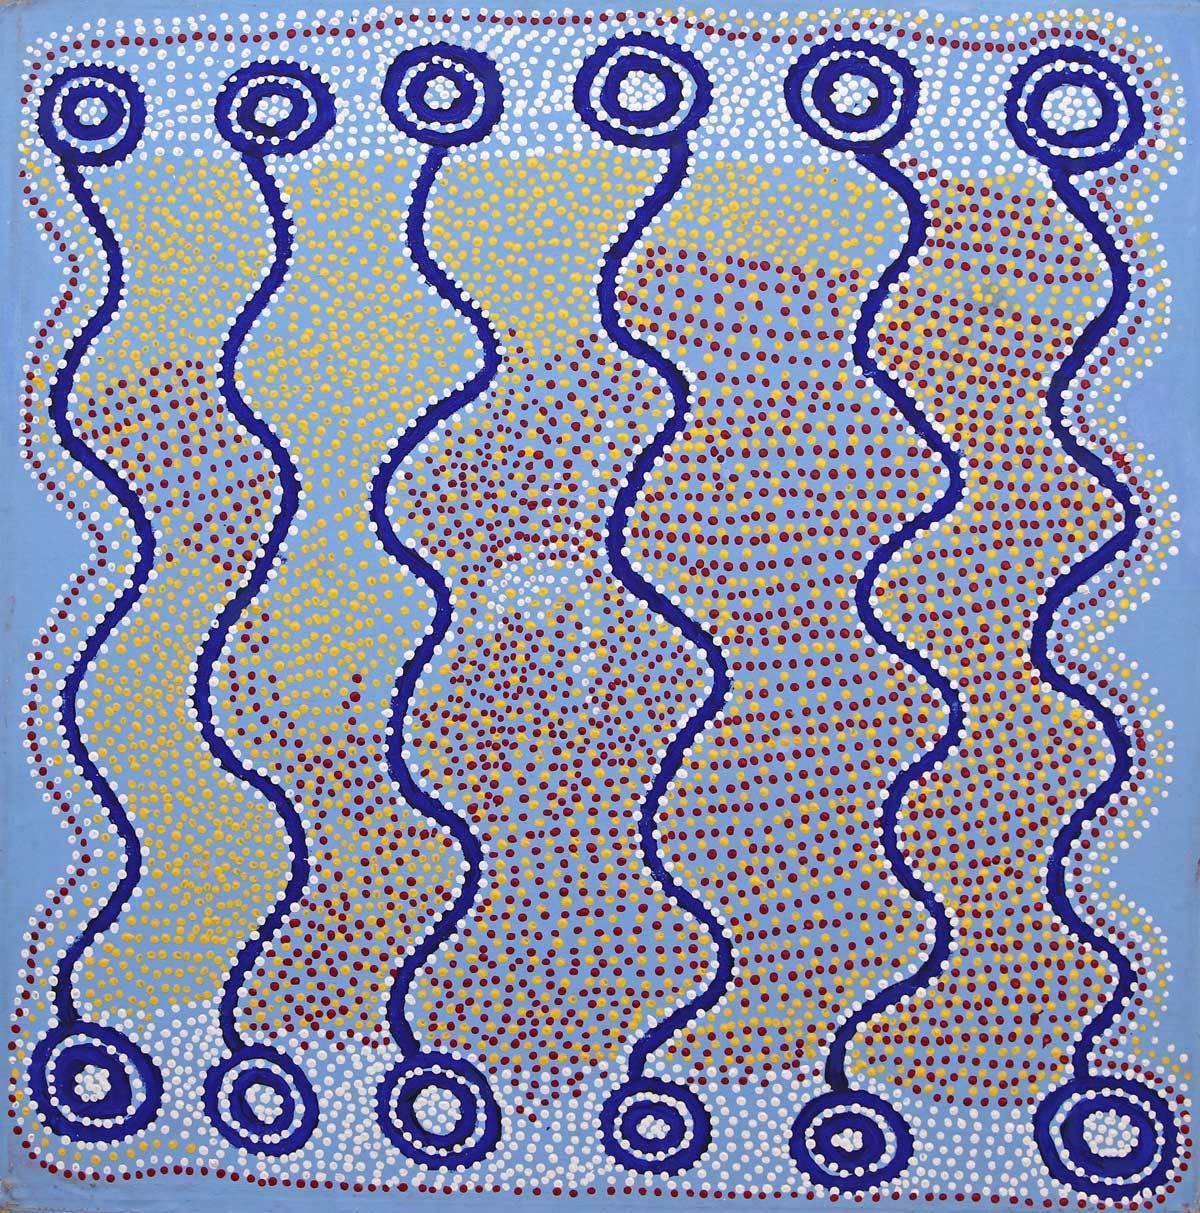 NGAPA TJUKURRPAOriginal Aboriginal ArtShorty Jangala Robertson (1925-2014)Boomerang Art